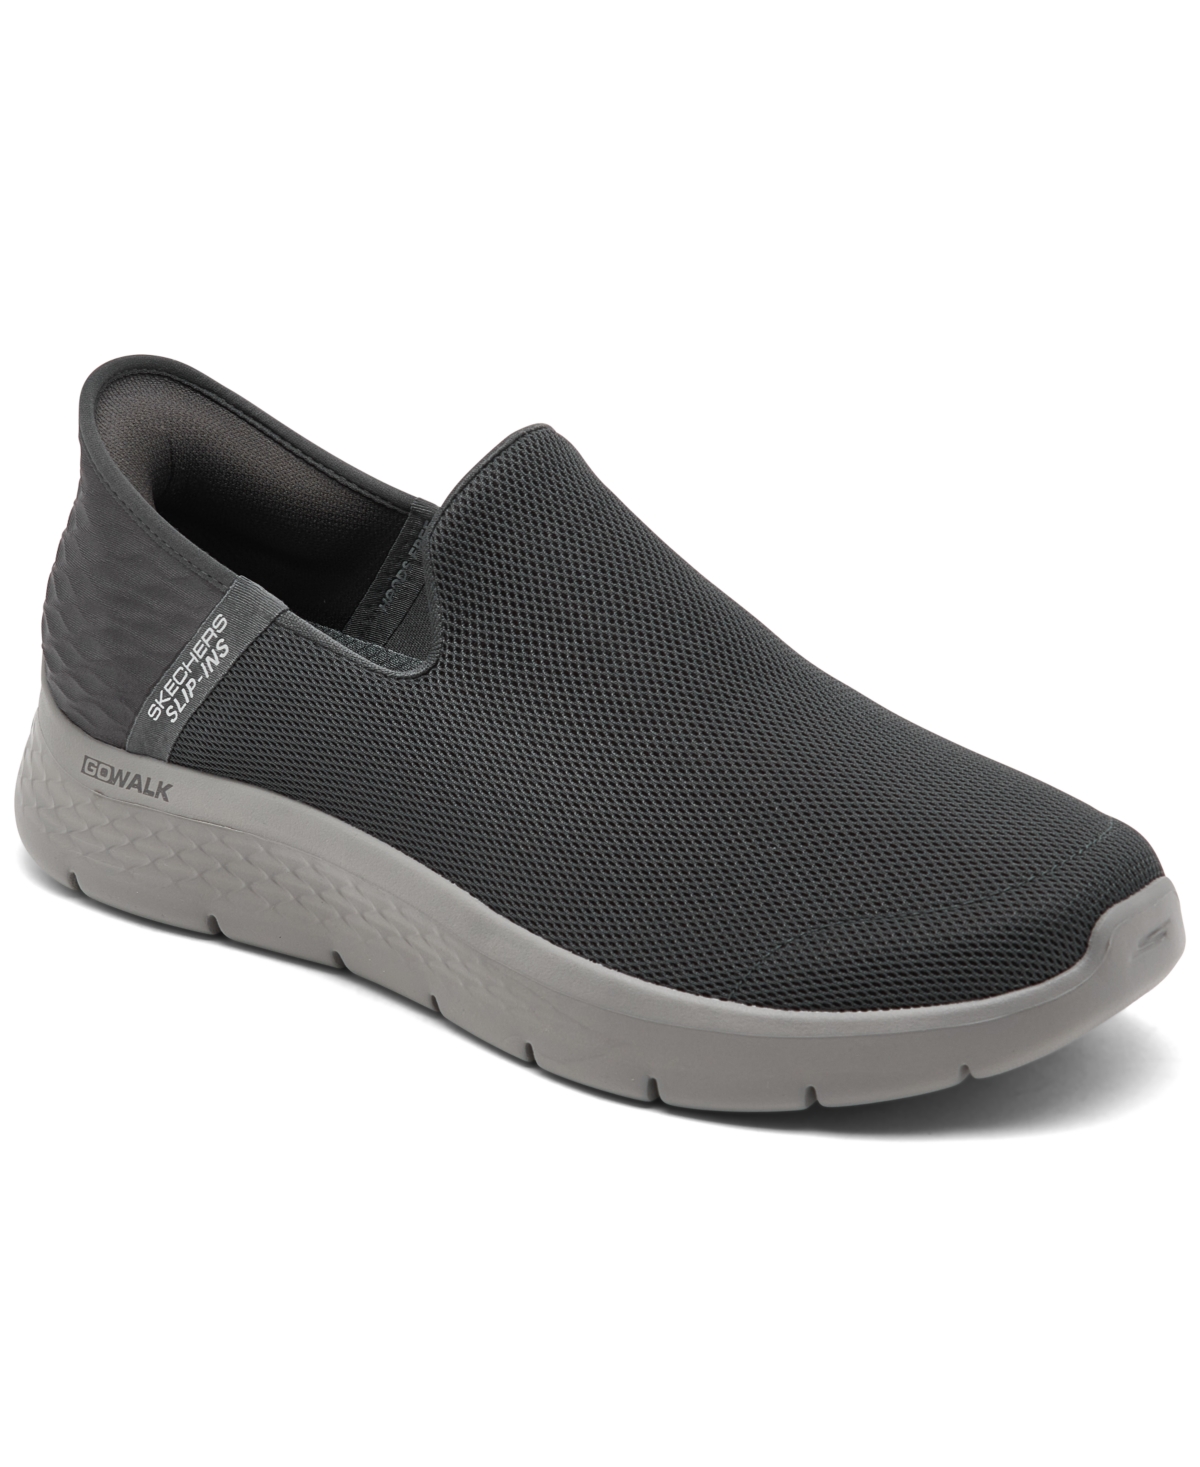 Men's Slip-Ins GoWalk Flex Slip-On Casual Sneakers from Finish Line - Dkgy-dark